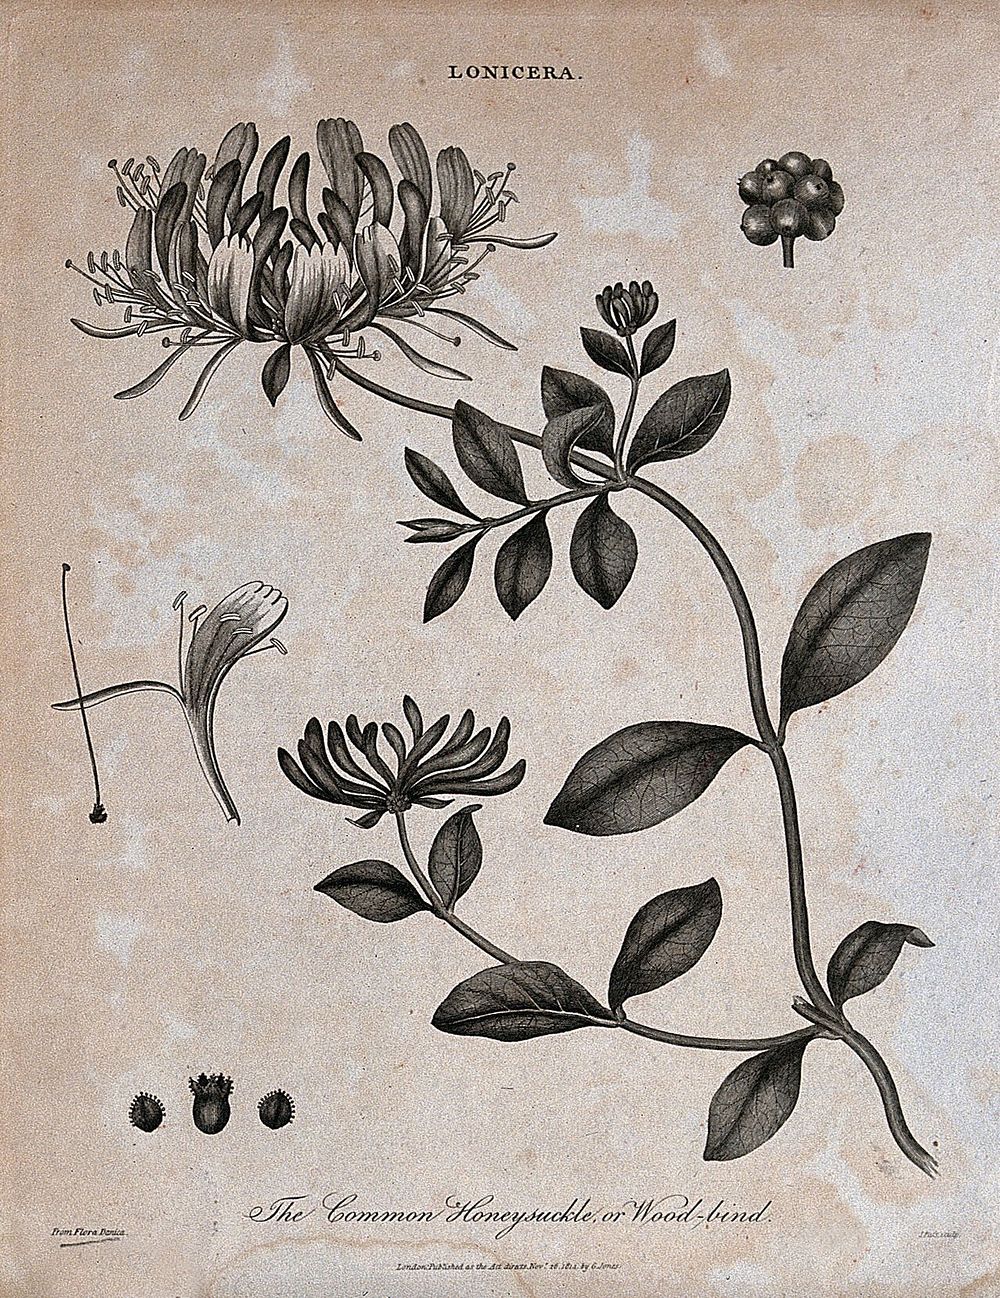 Honeysuckle or woodbine (Lonicera periclymenum): flowering stem and floral segments. Etching by J. Pass, c. 1814.